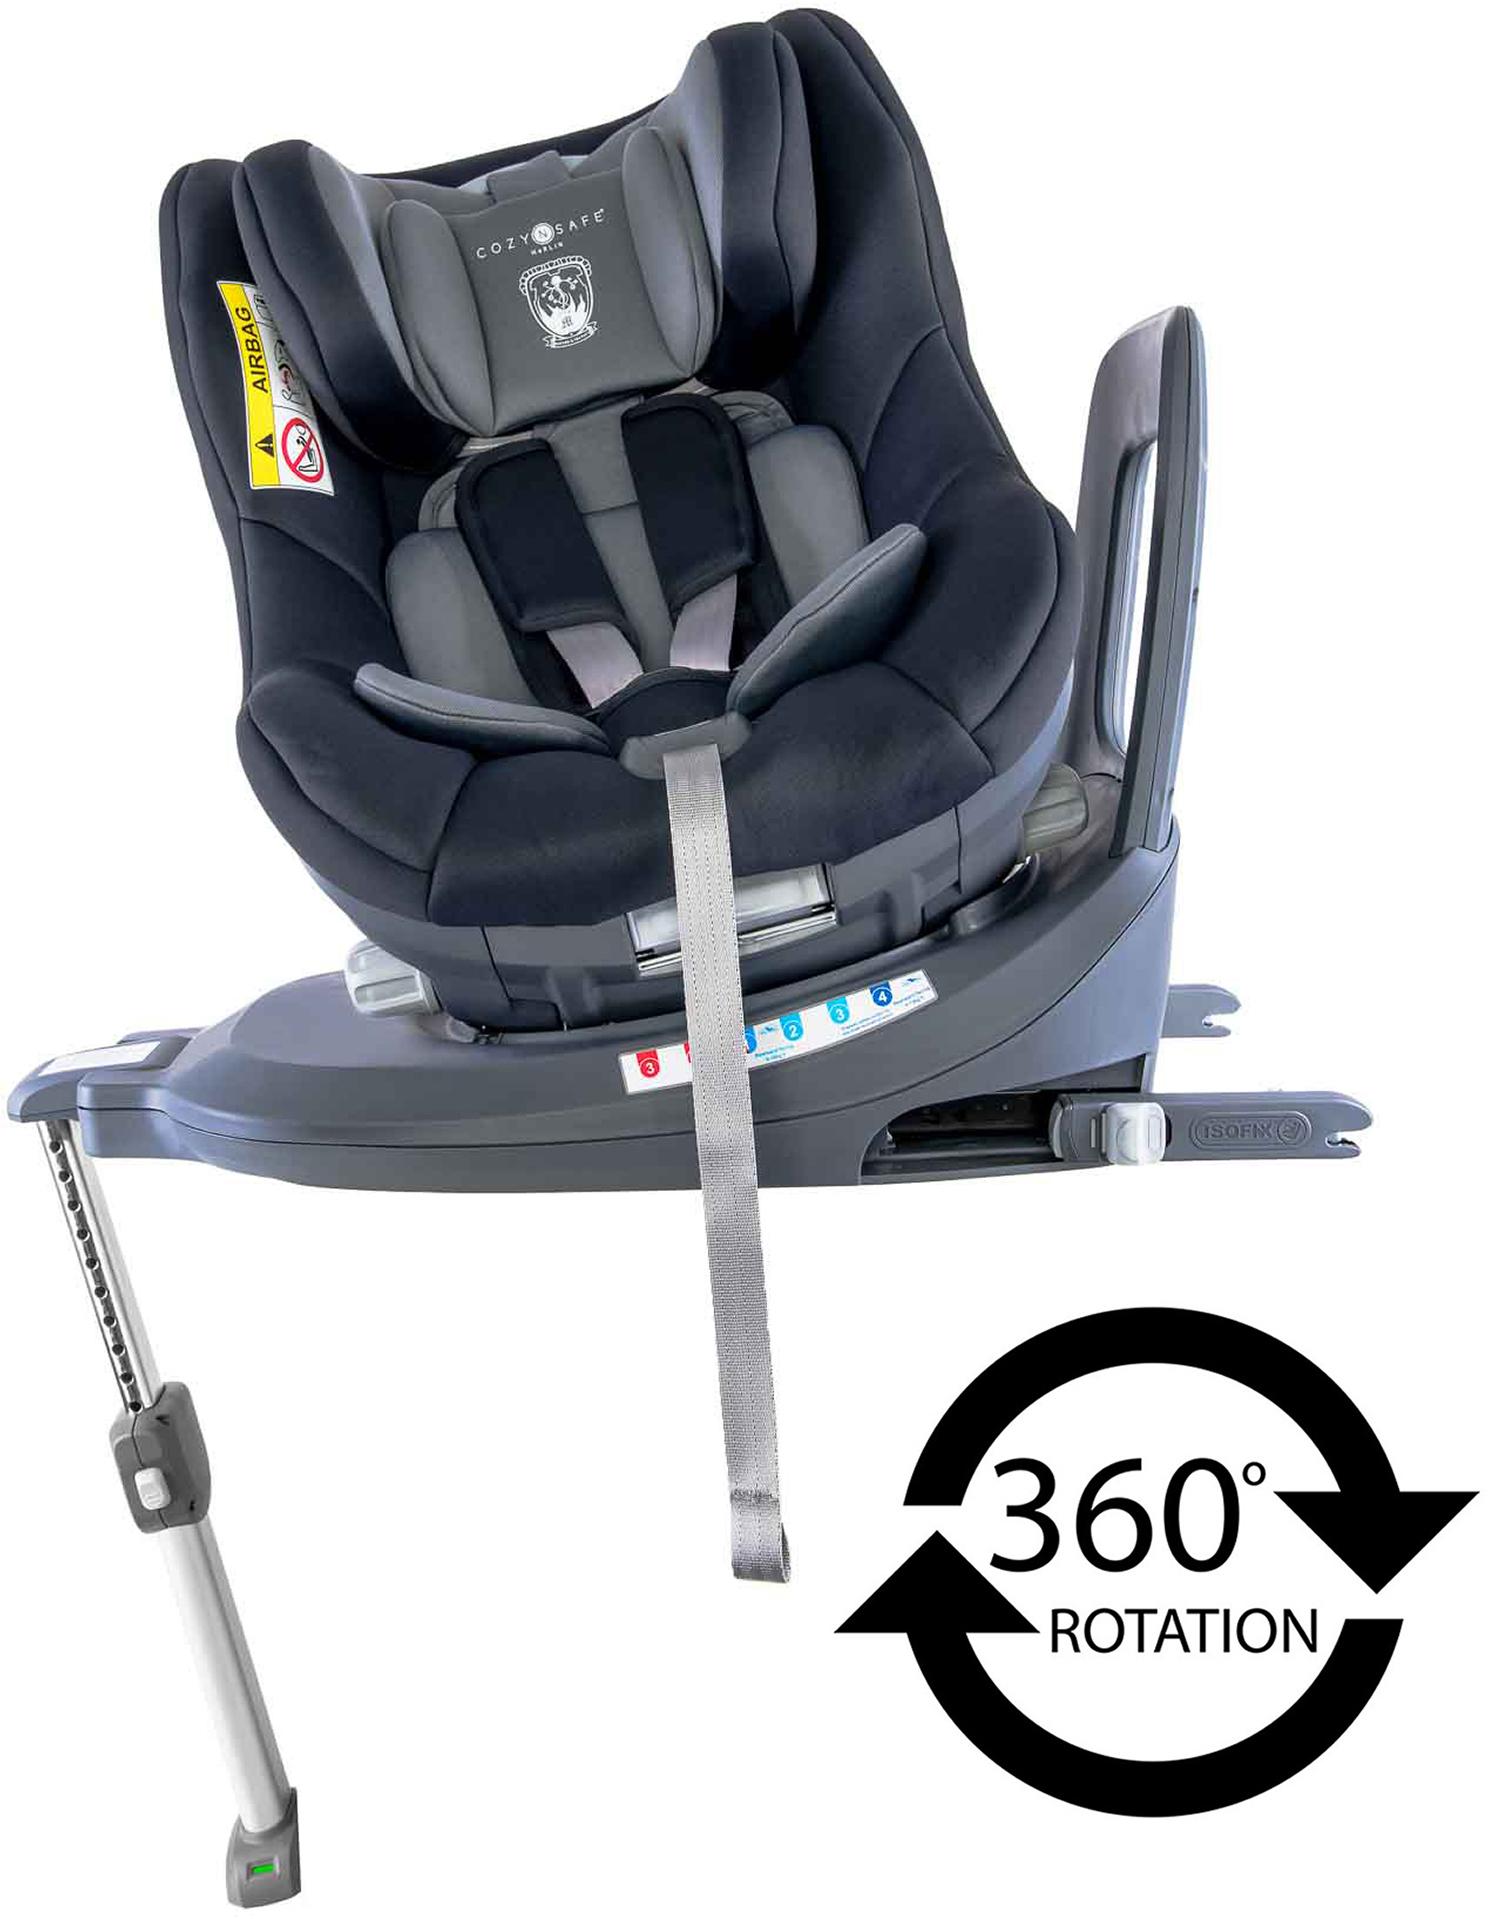 Cozynsafe Merlin 360 Isofix Group 0+/1 Child Car Seat - Black/Grey